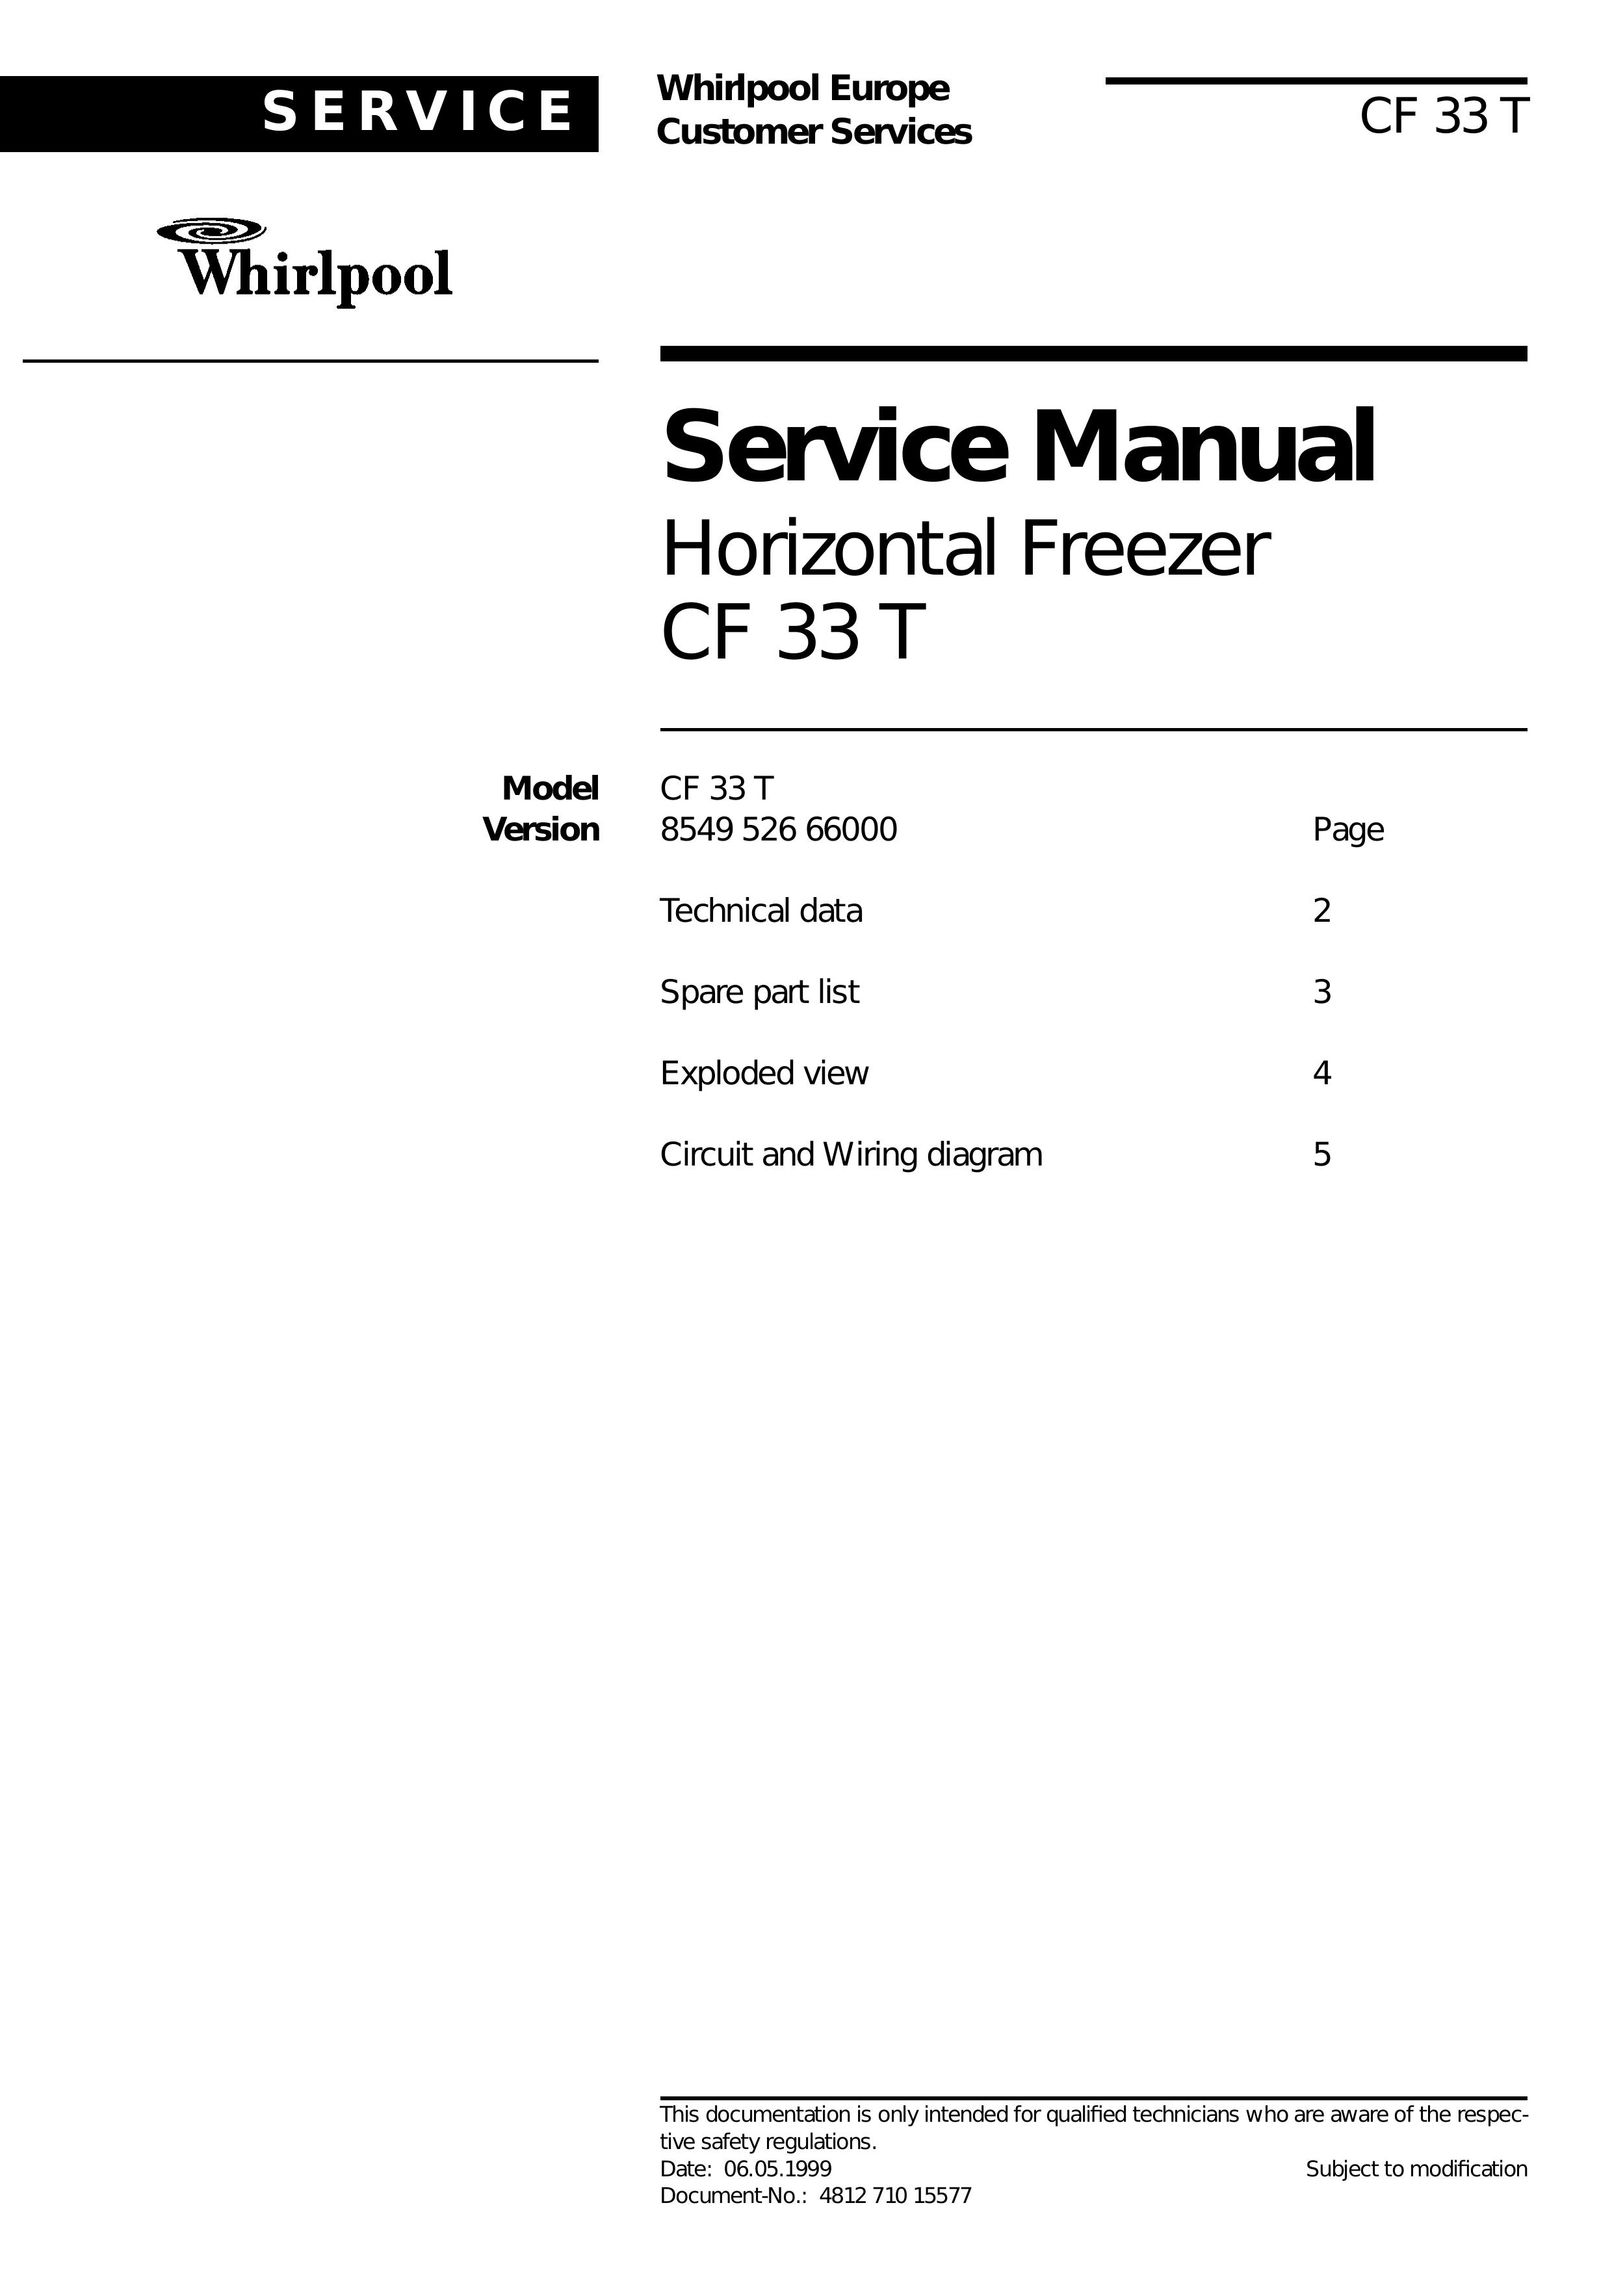 Whirlpool CF 33 T Freezer User Manual